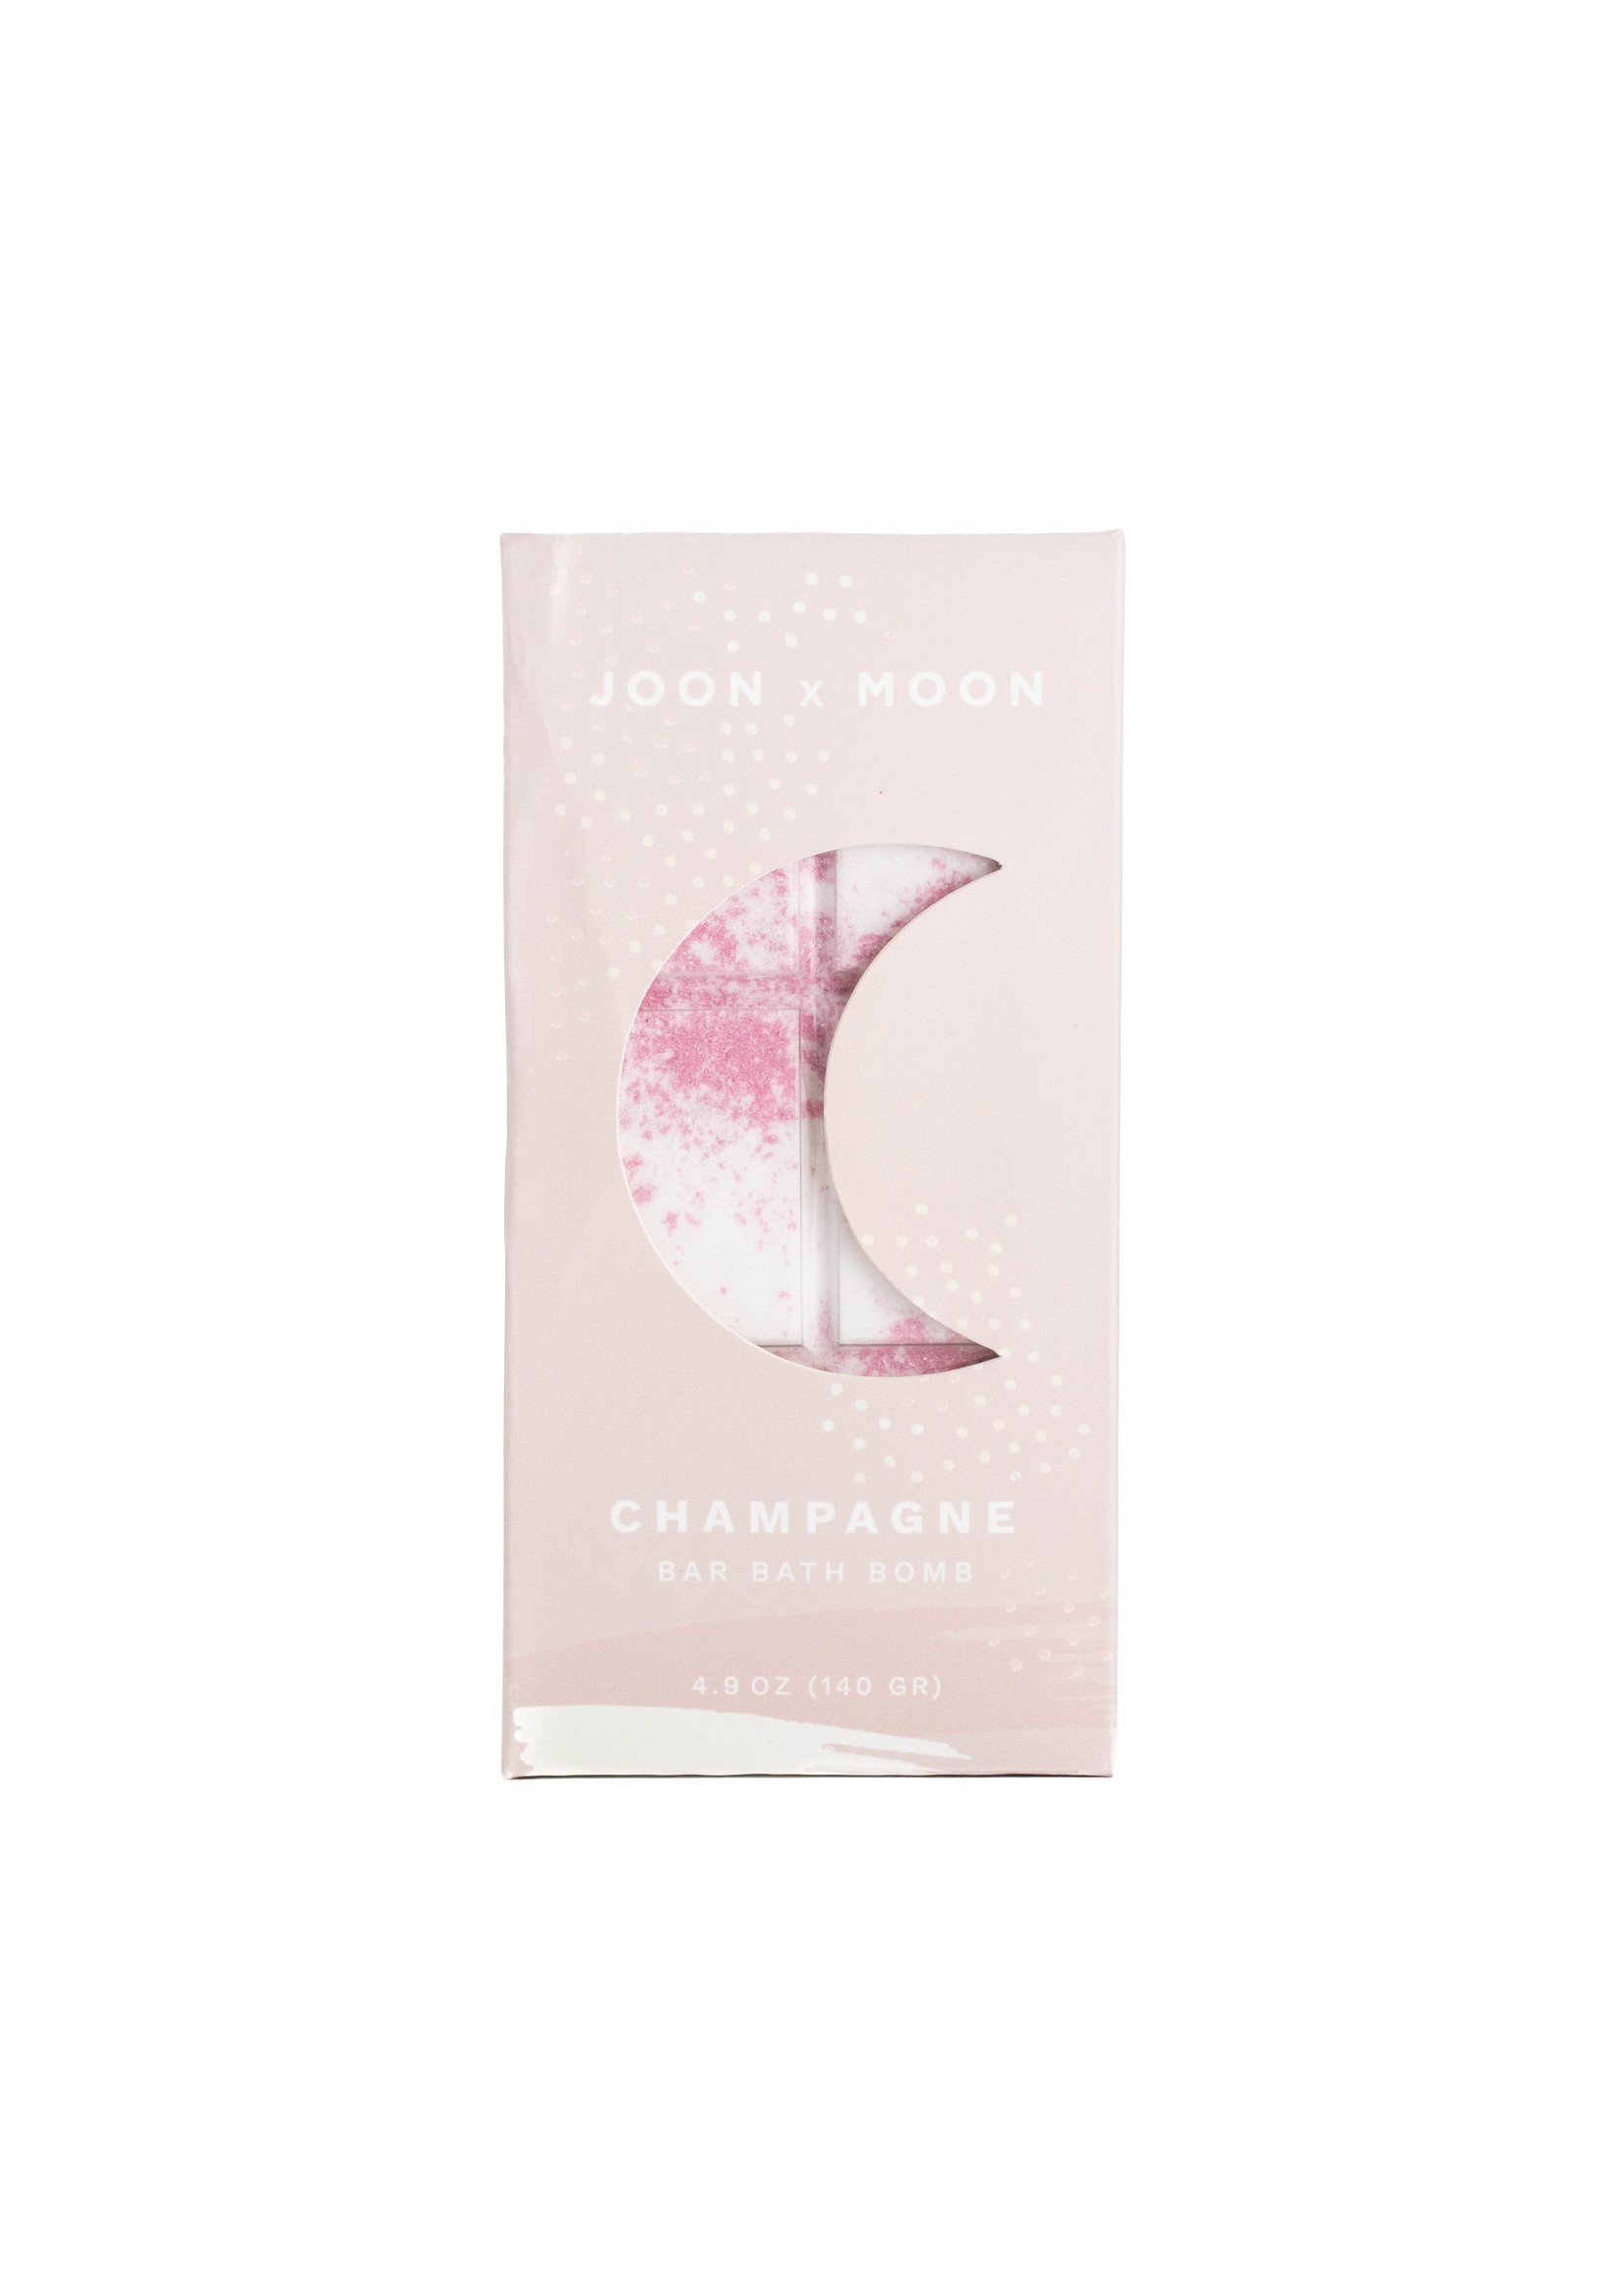 JOON x MOON Champagne Bar Bath Bomb